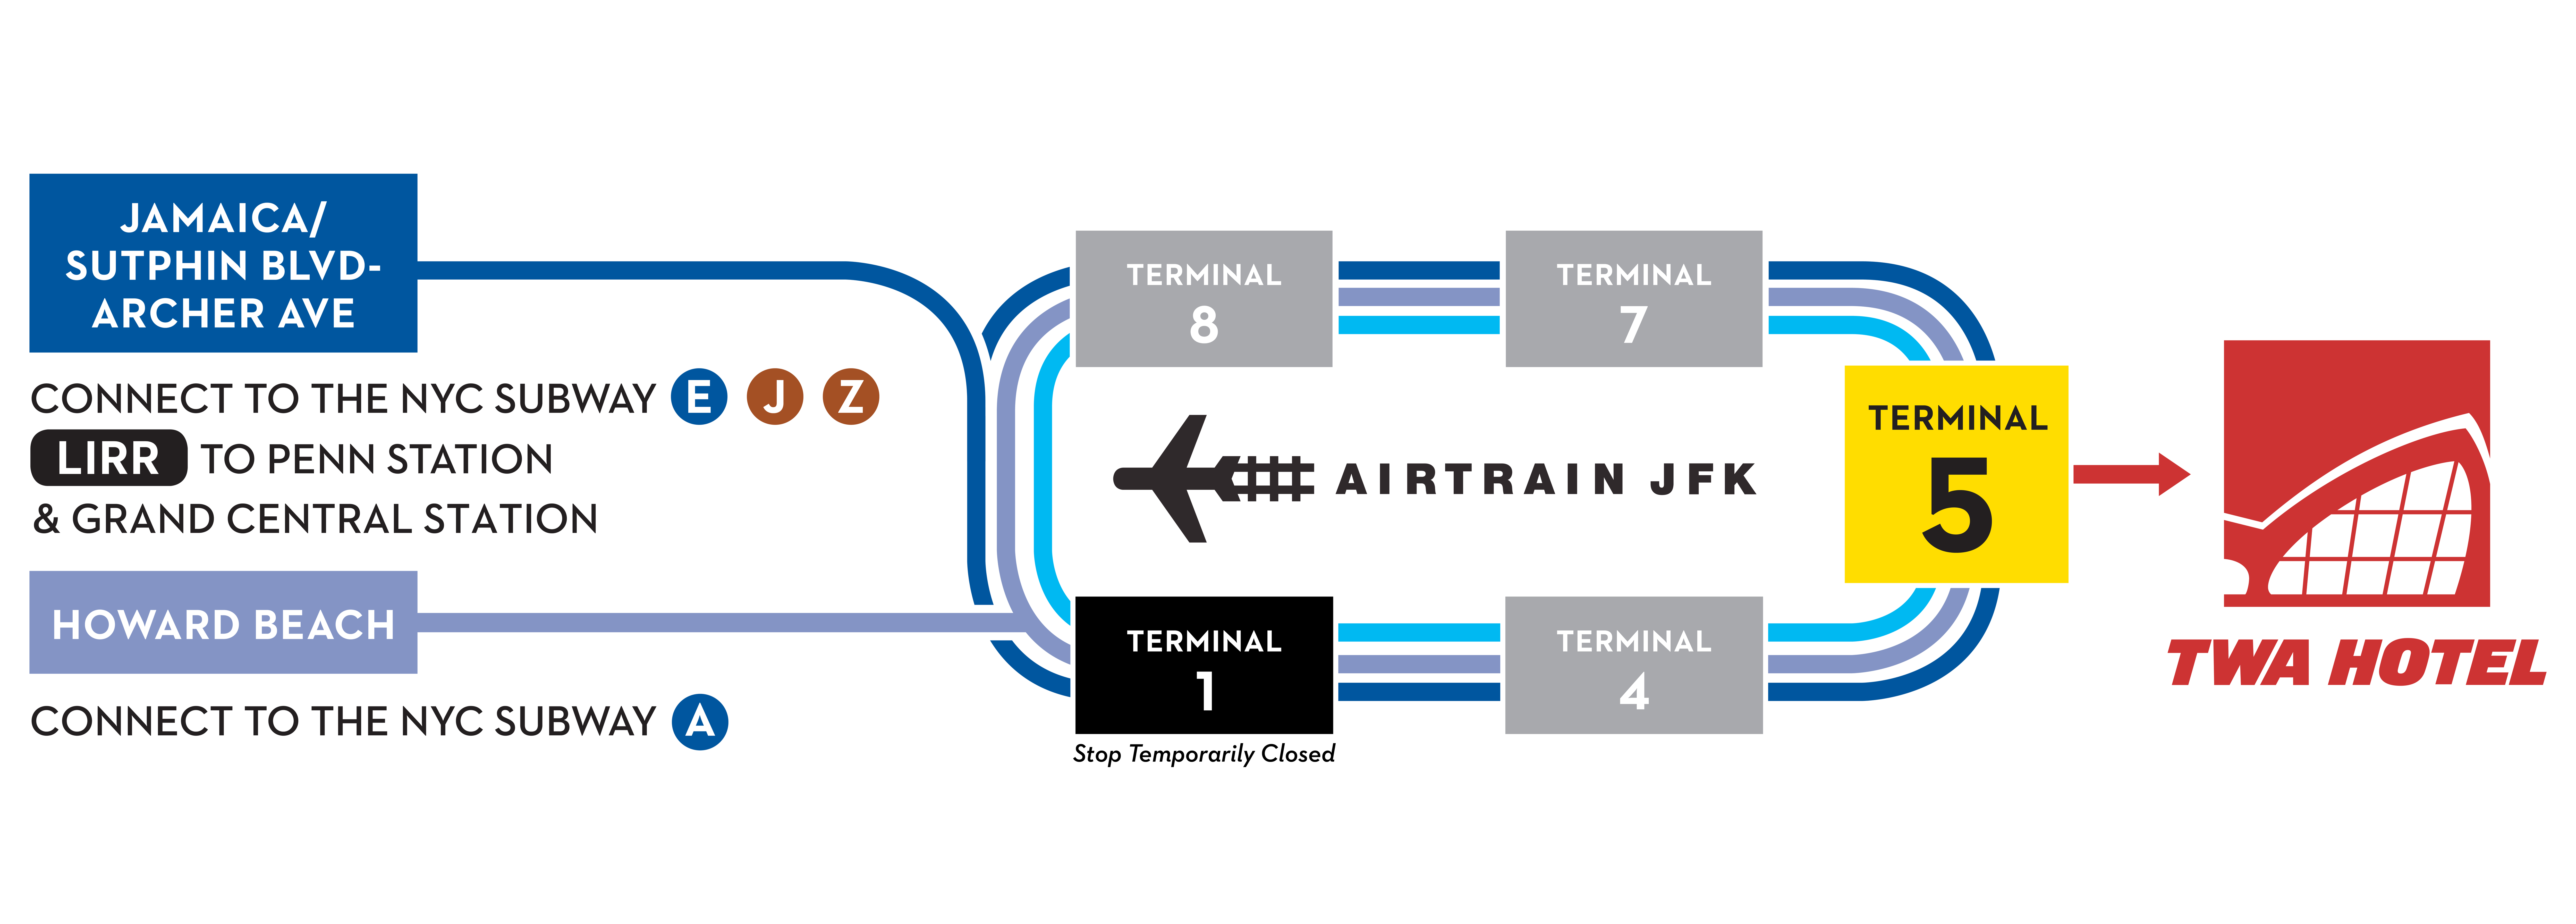 AirTrain Map to TWA Hotel